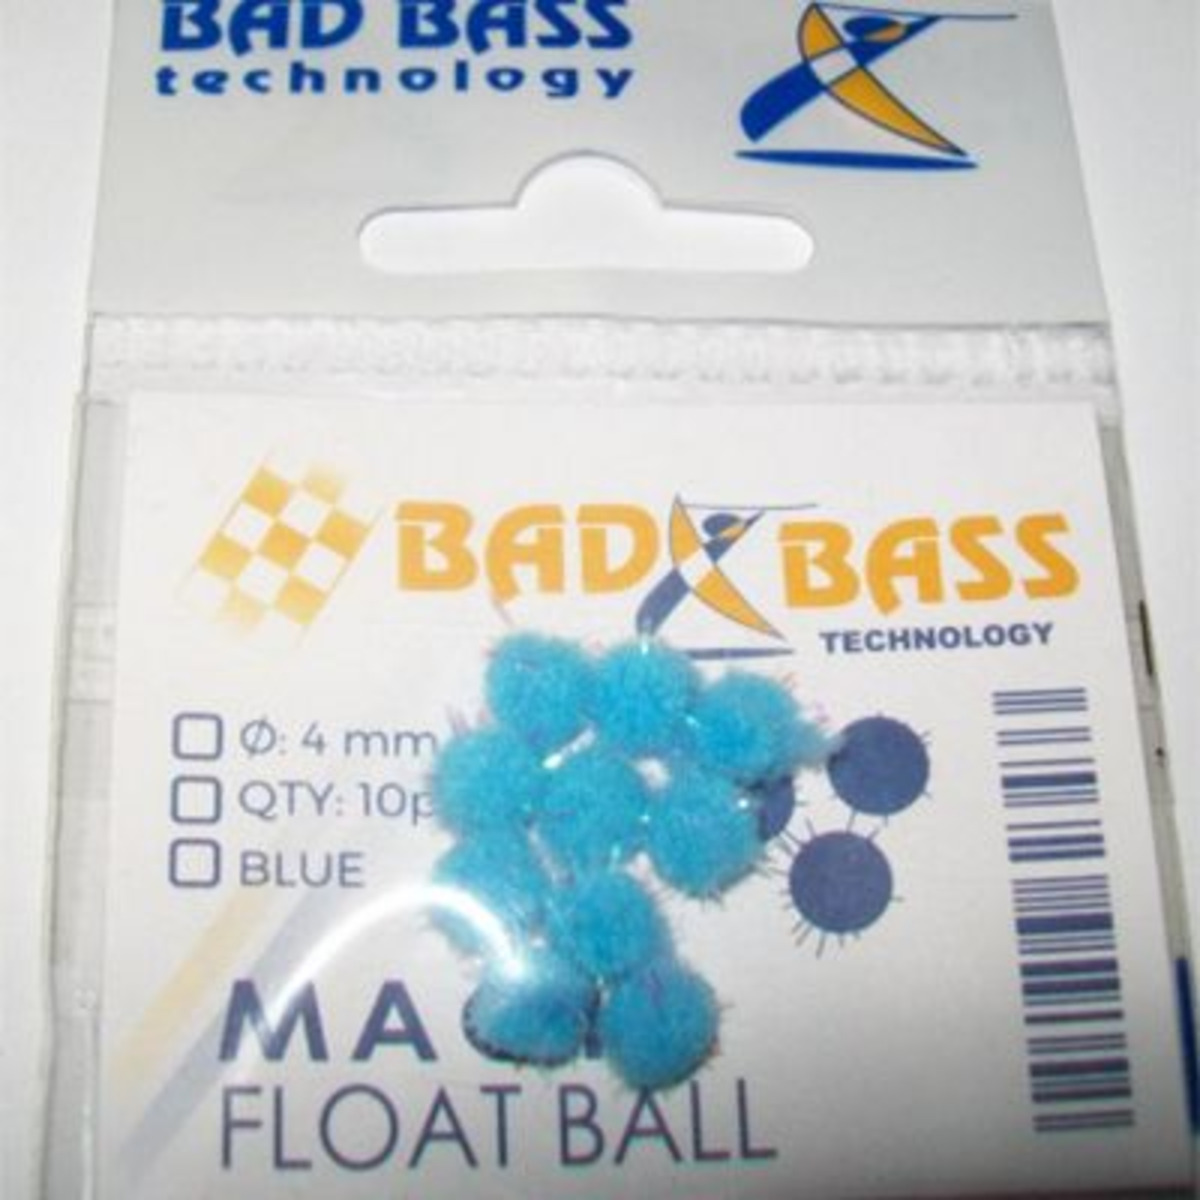 Bad Bass Magic Float Ball - 6 mm - Blue